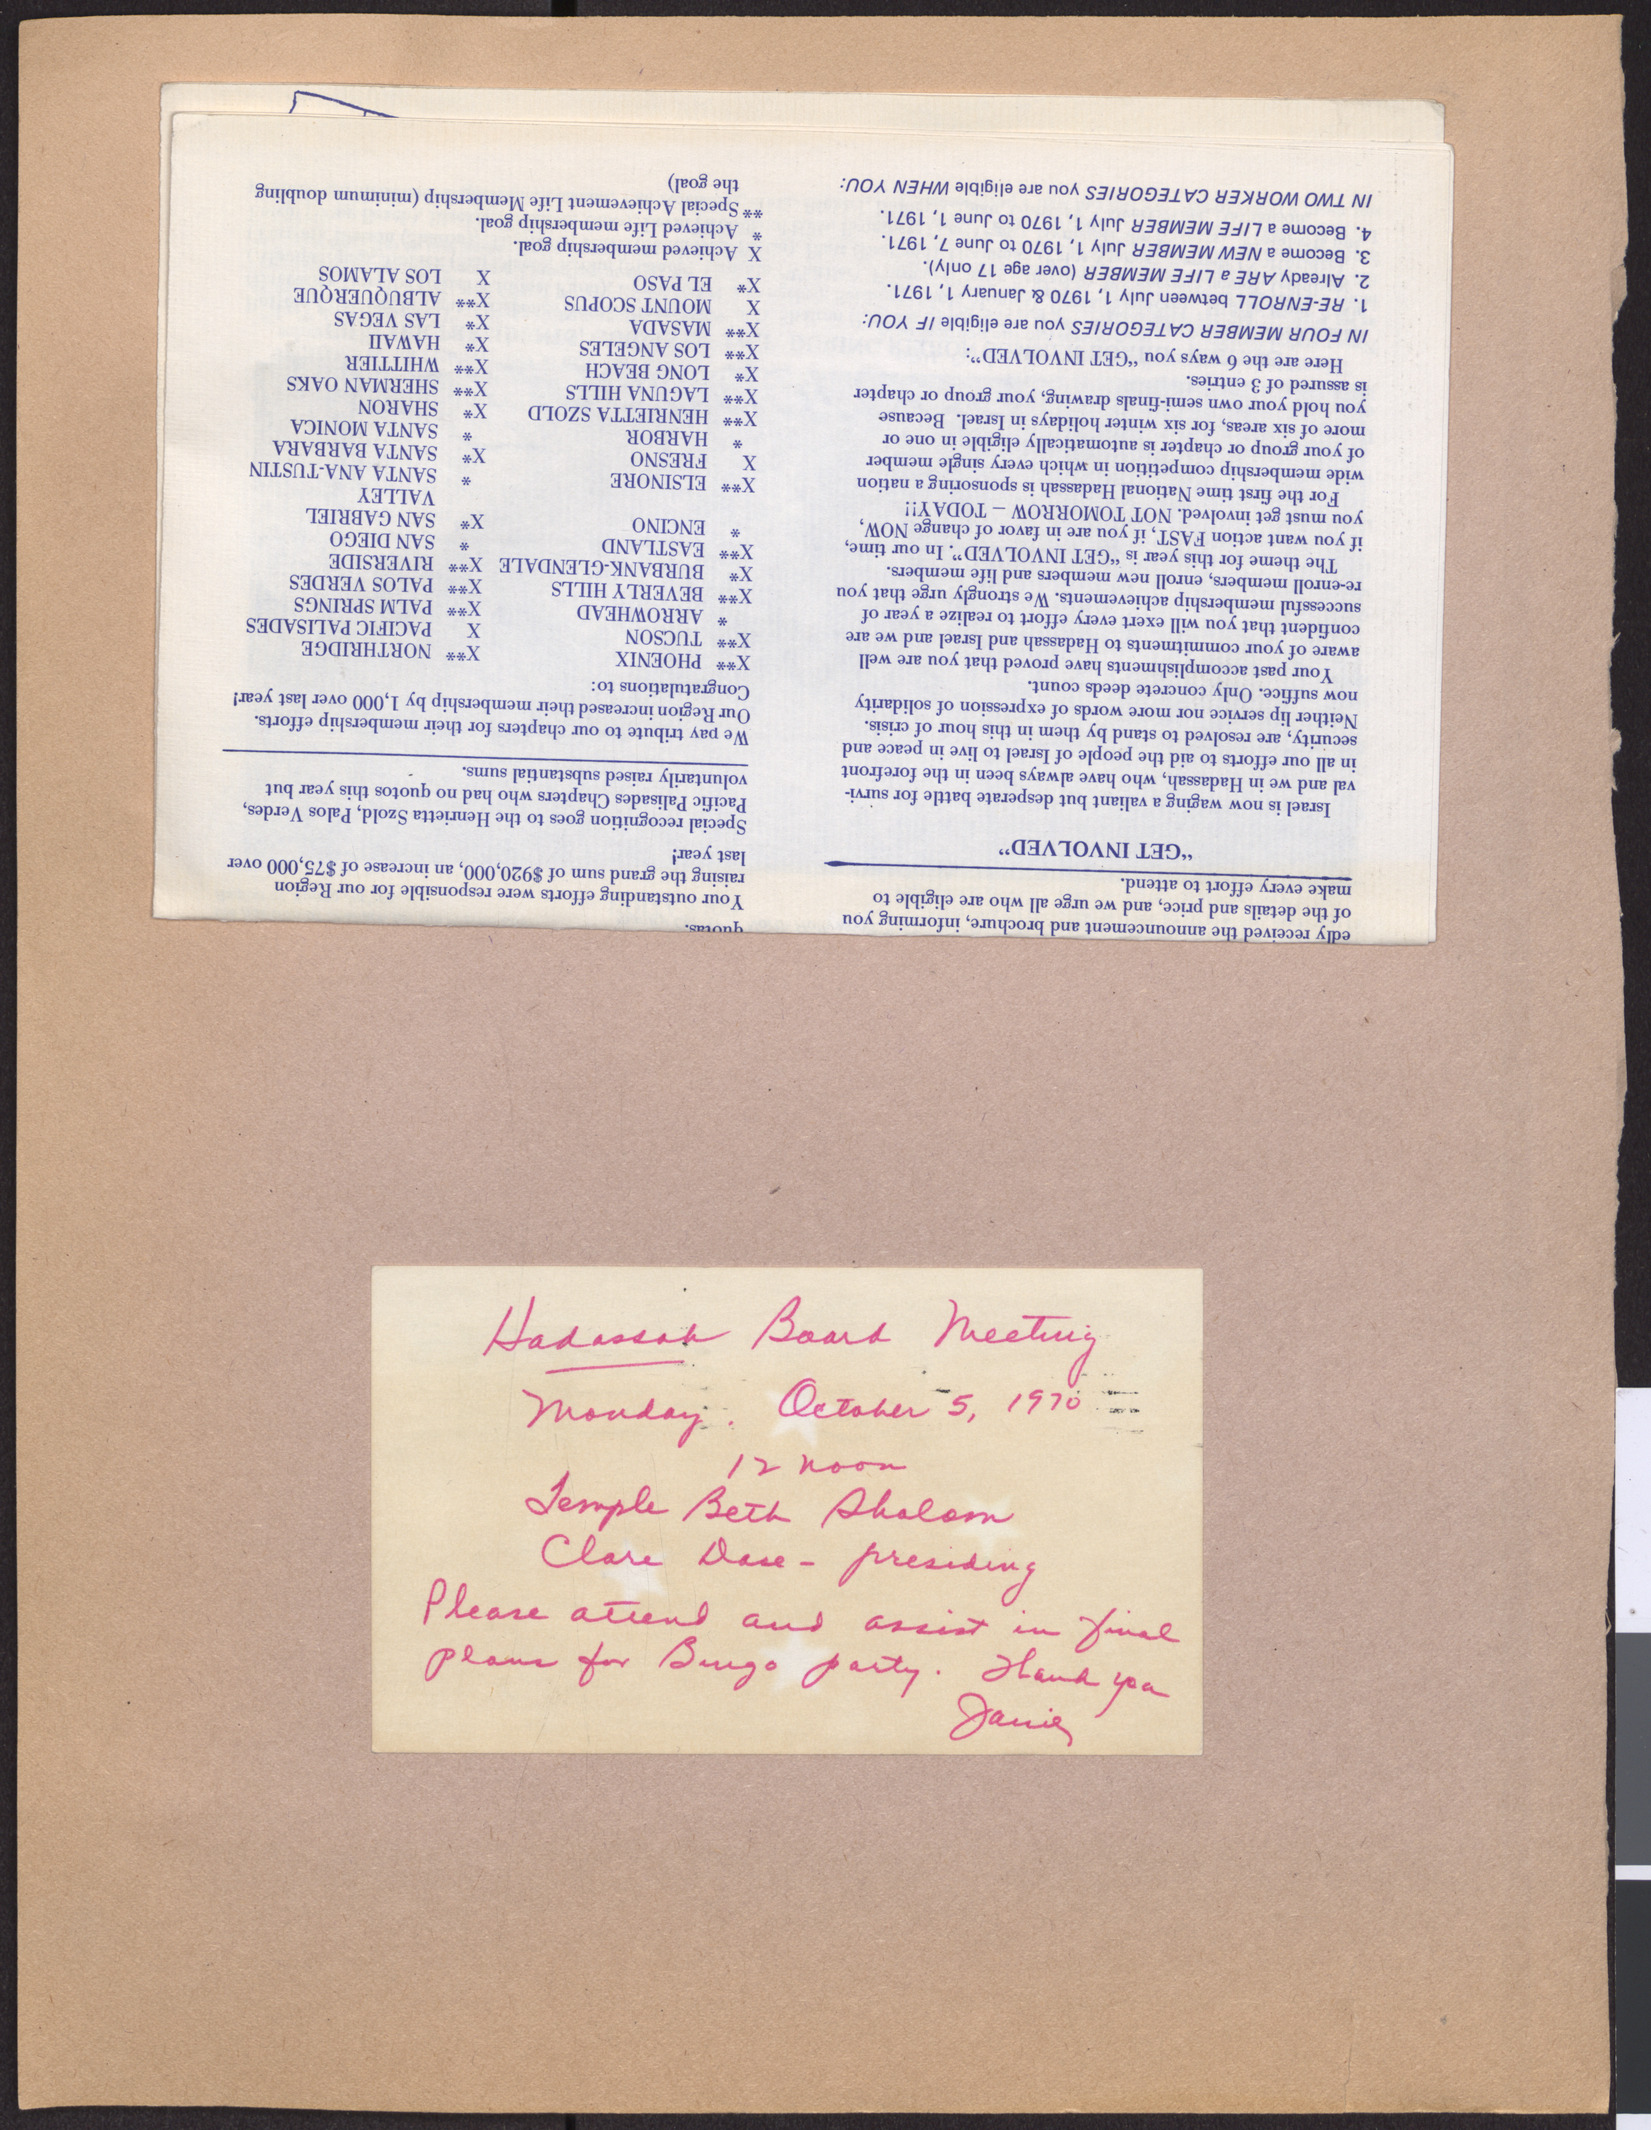 Invitation card to Hadassah board meeting, October 5, 1970